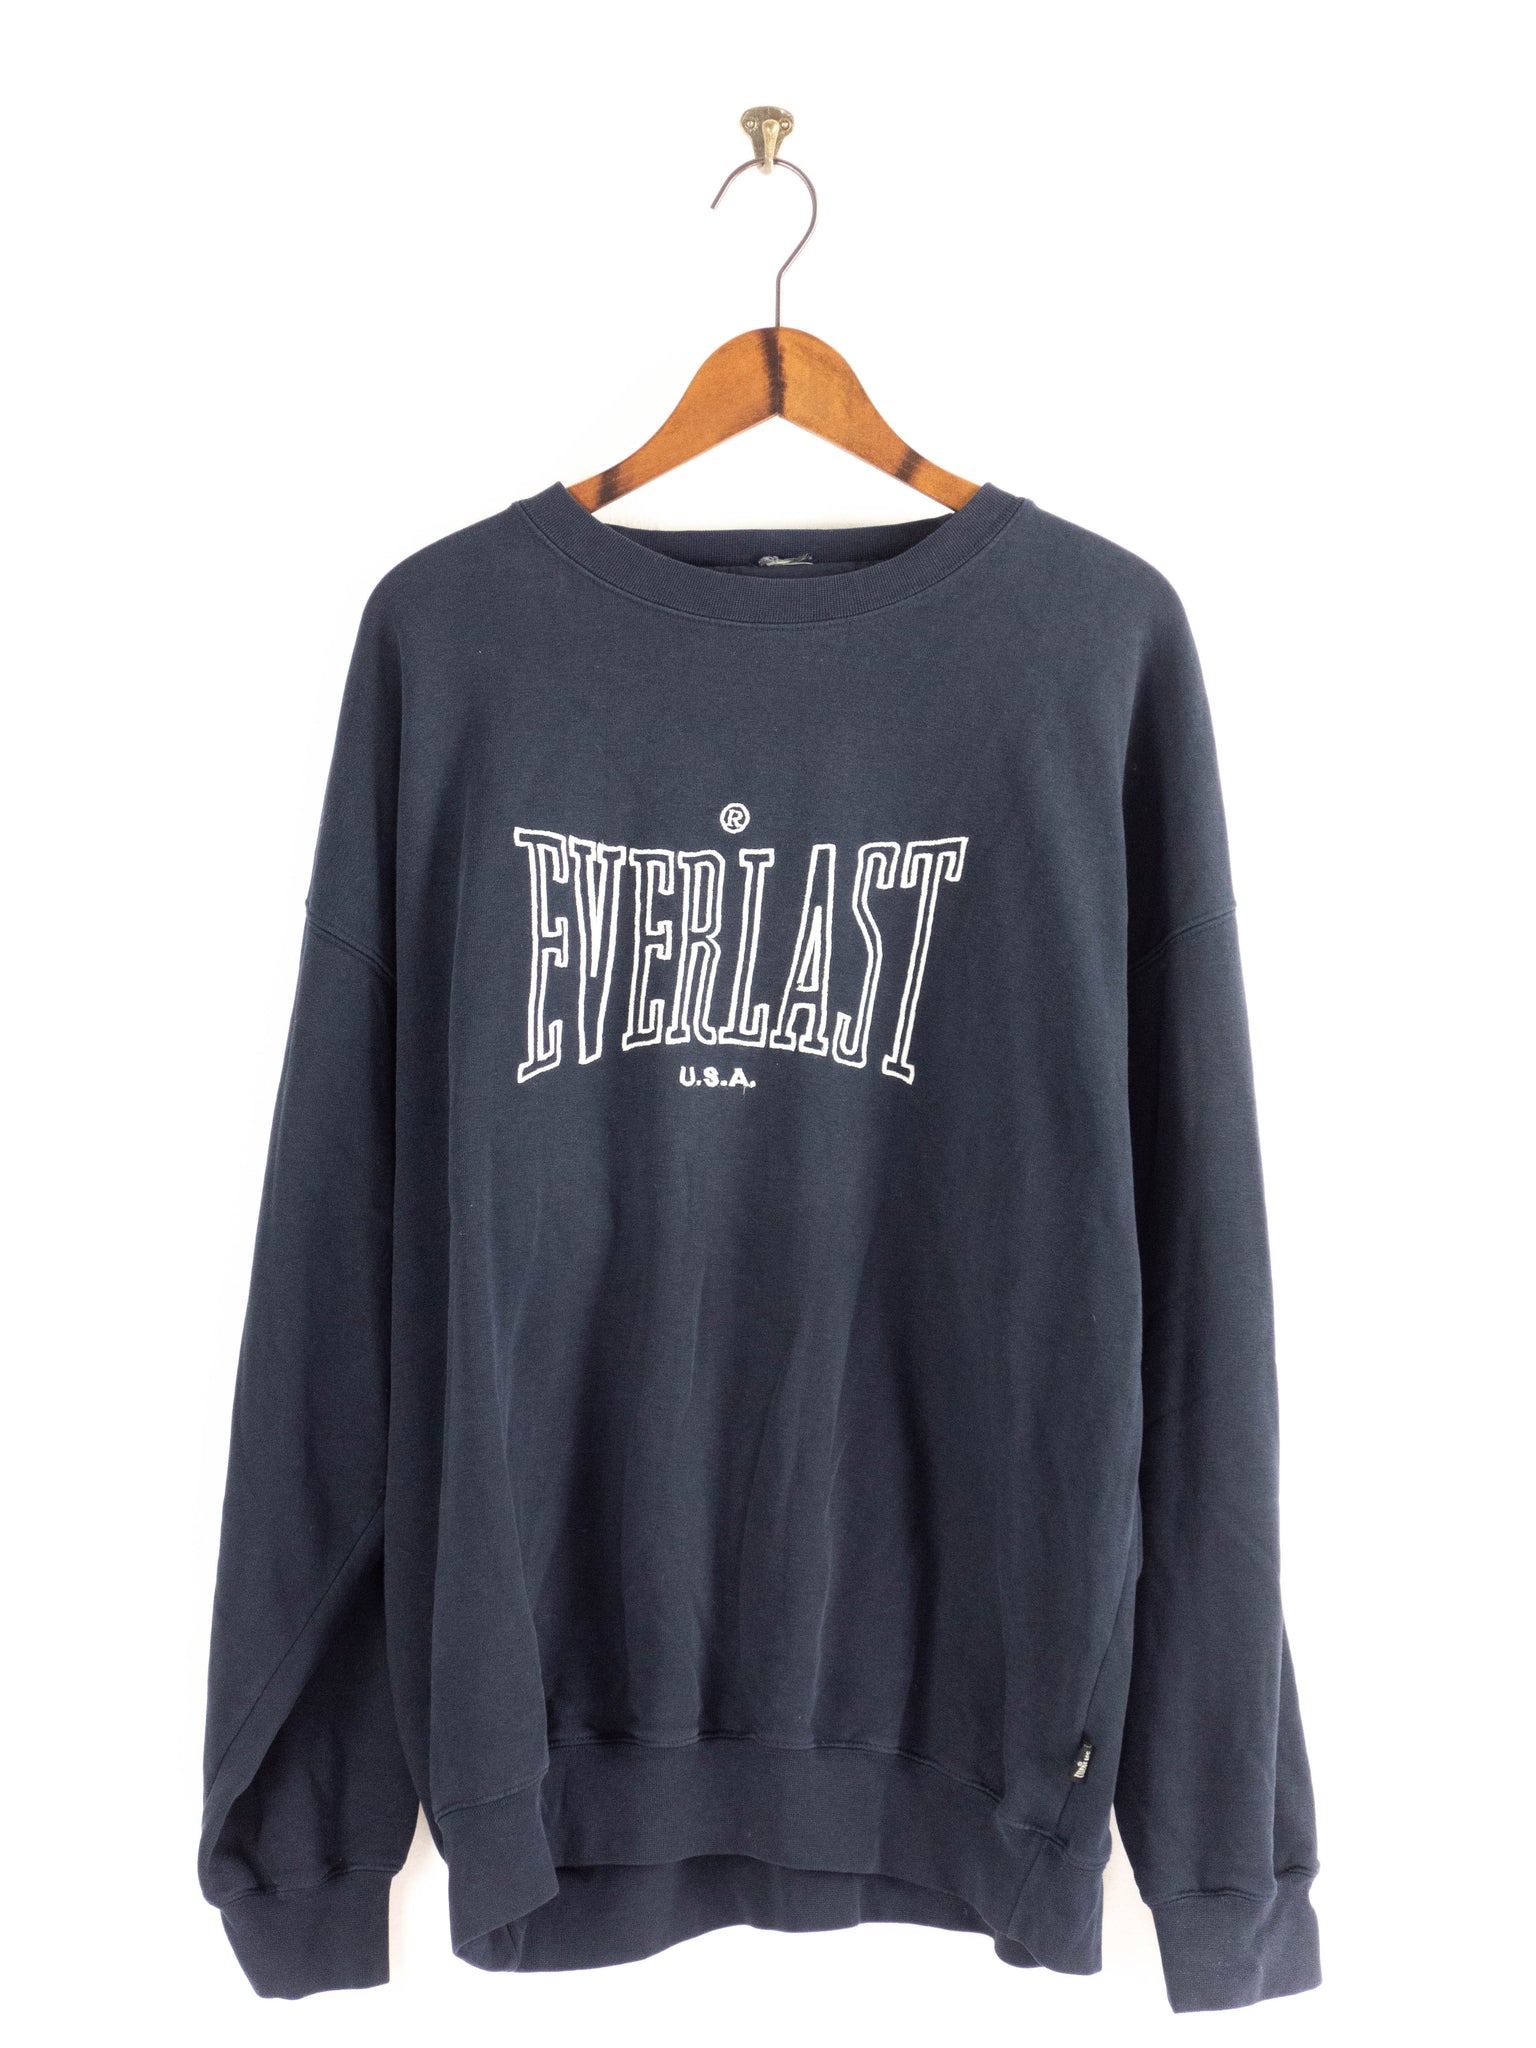 Everlast Sweater XL